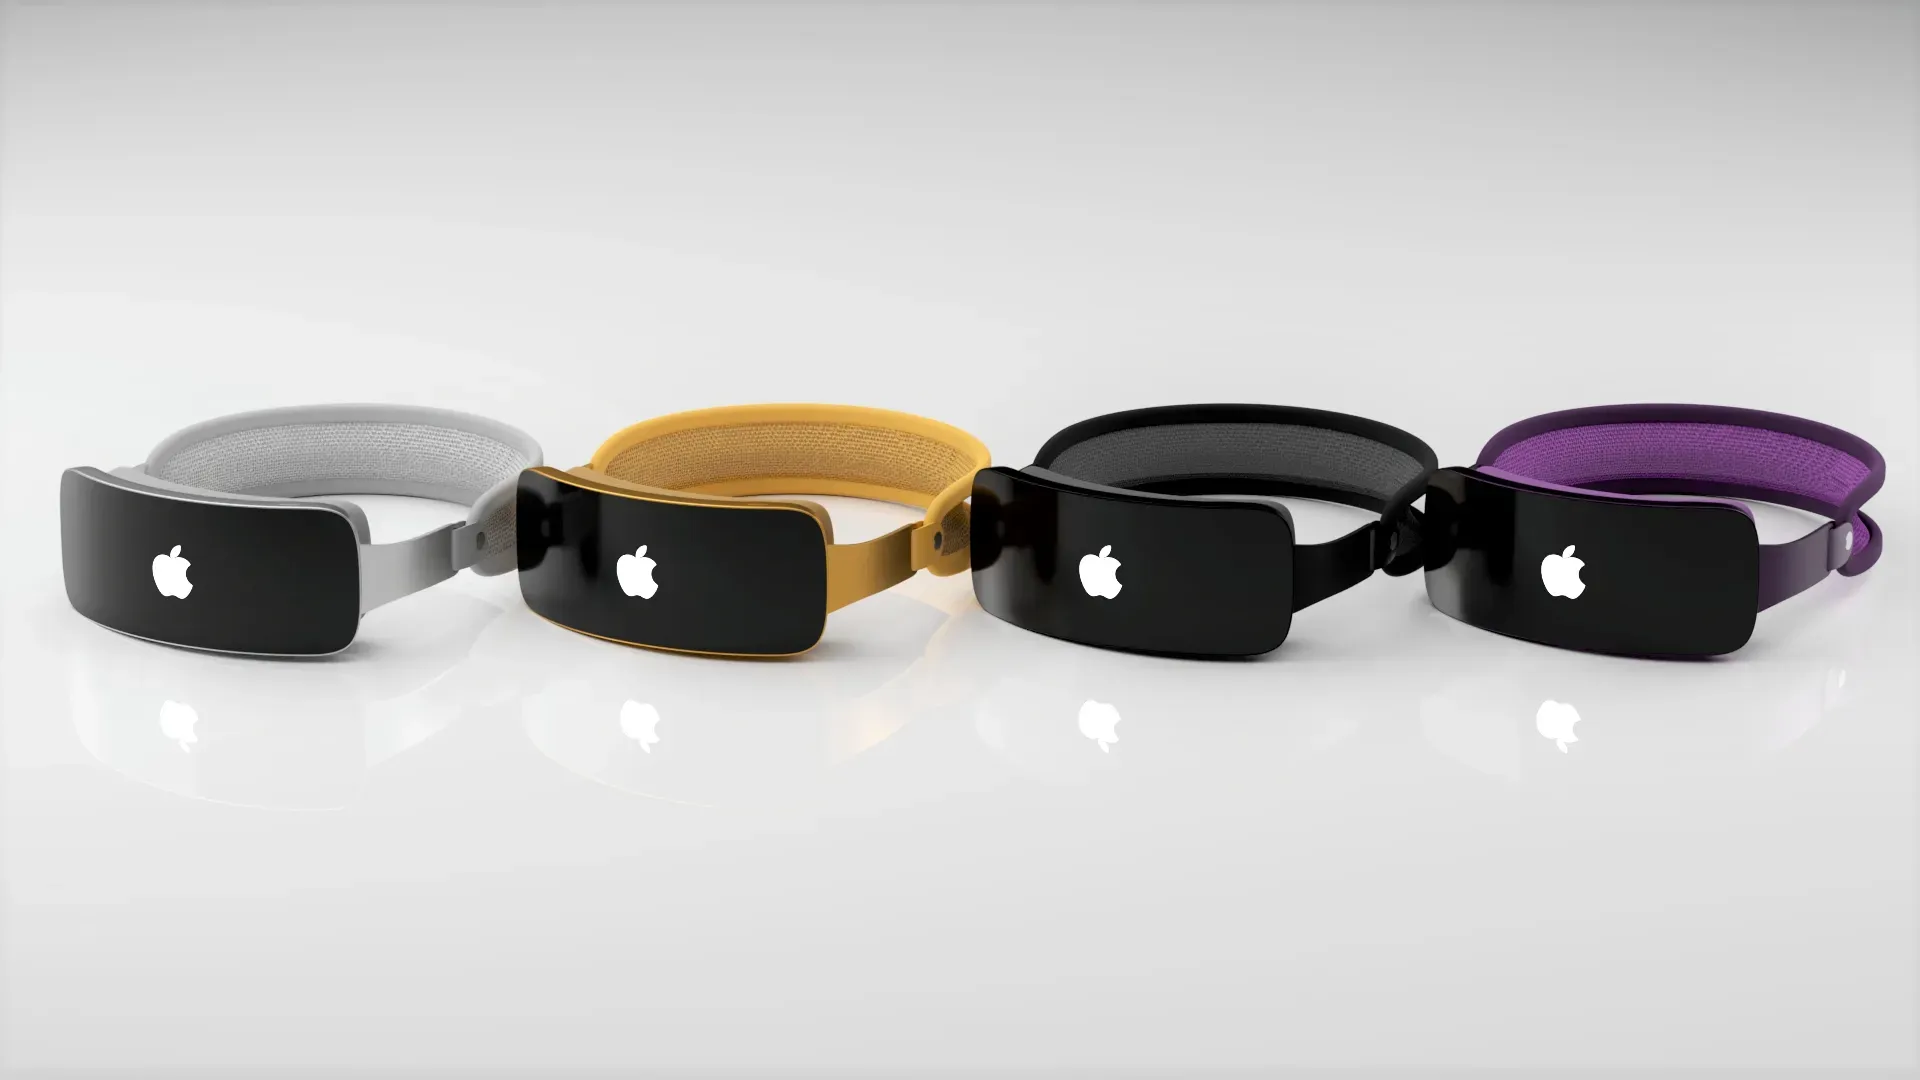 Apple의 Reality Pro 헤드셋을 4가지 색상으로 상상하는 렌더링